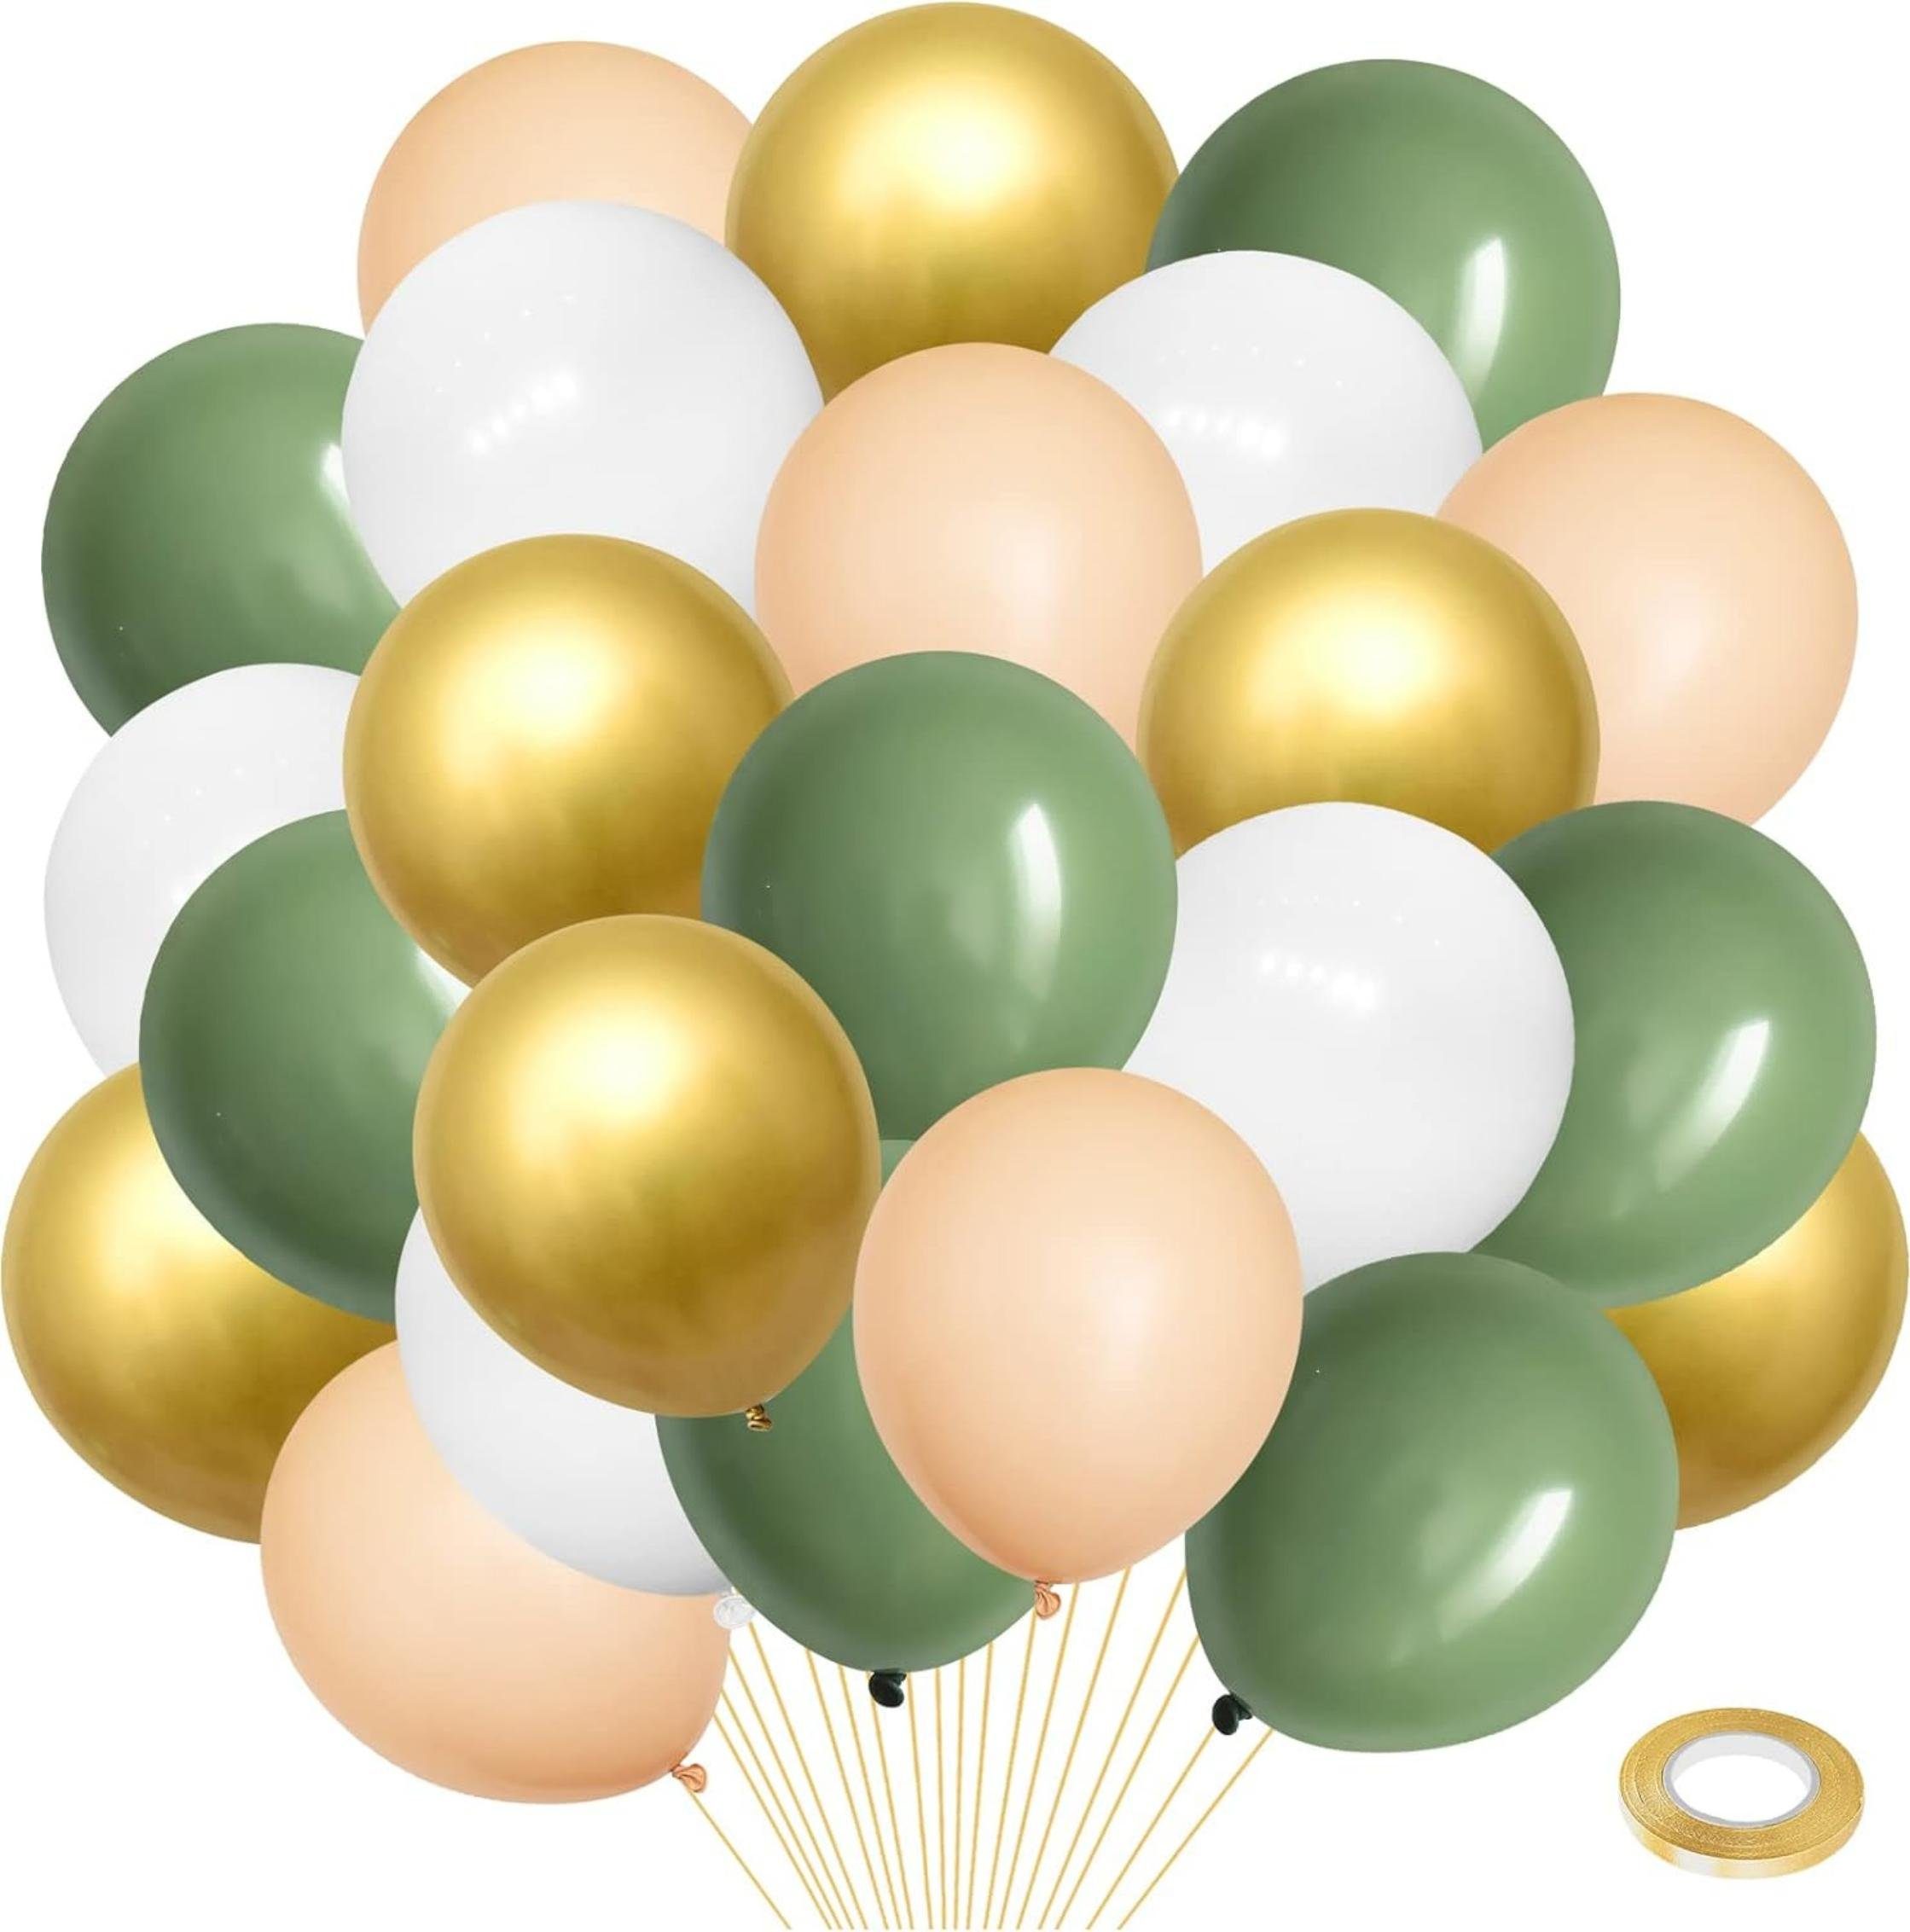 Coonoor Luftballon 50 pcs Luftballons Girlande Deko Gold Grün Geburtstag